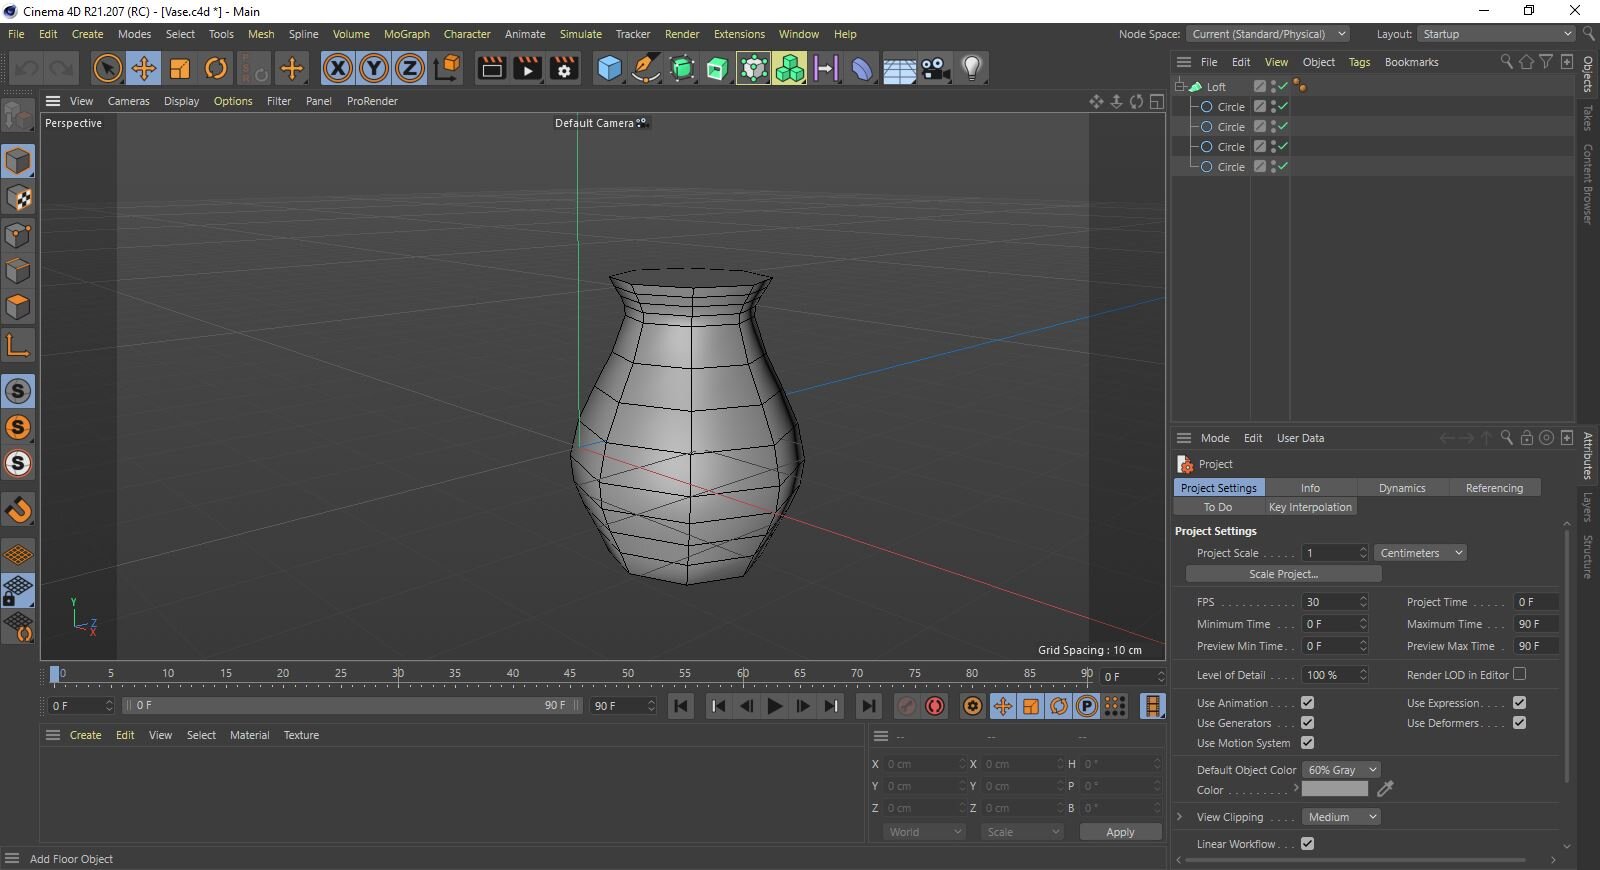 I began by designing a low-poly vase in Cinema 4D.